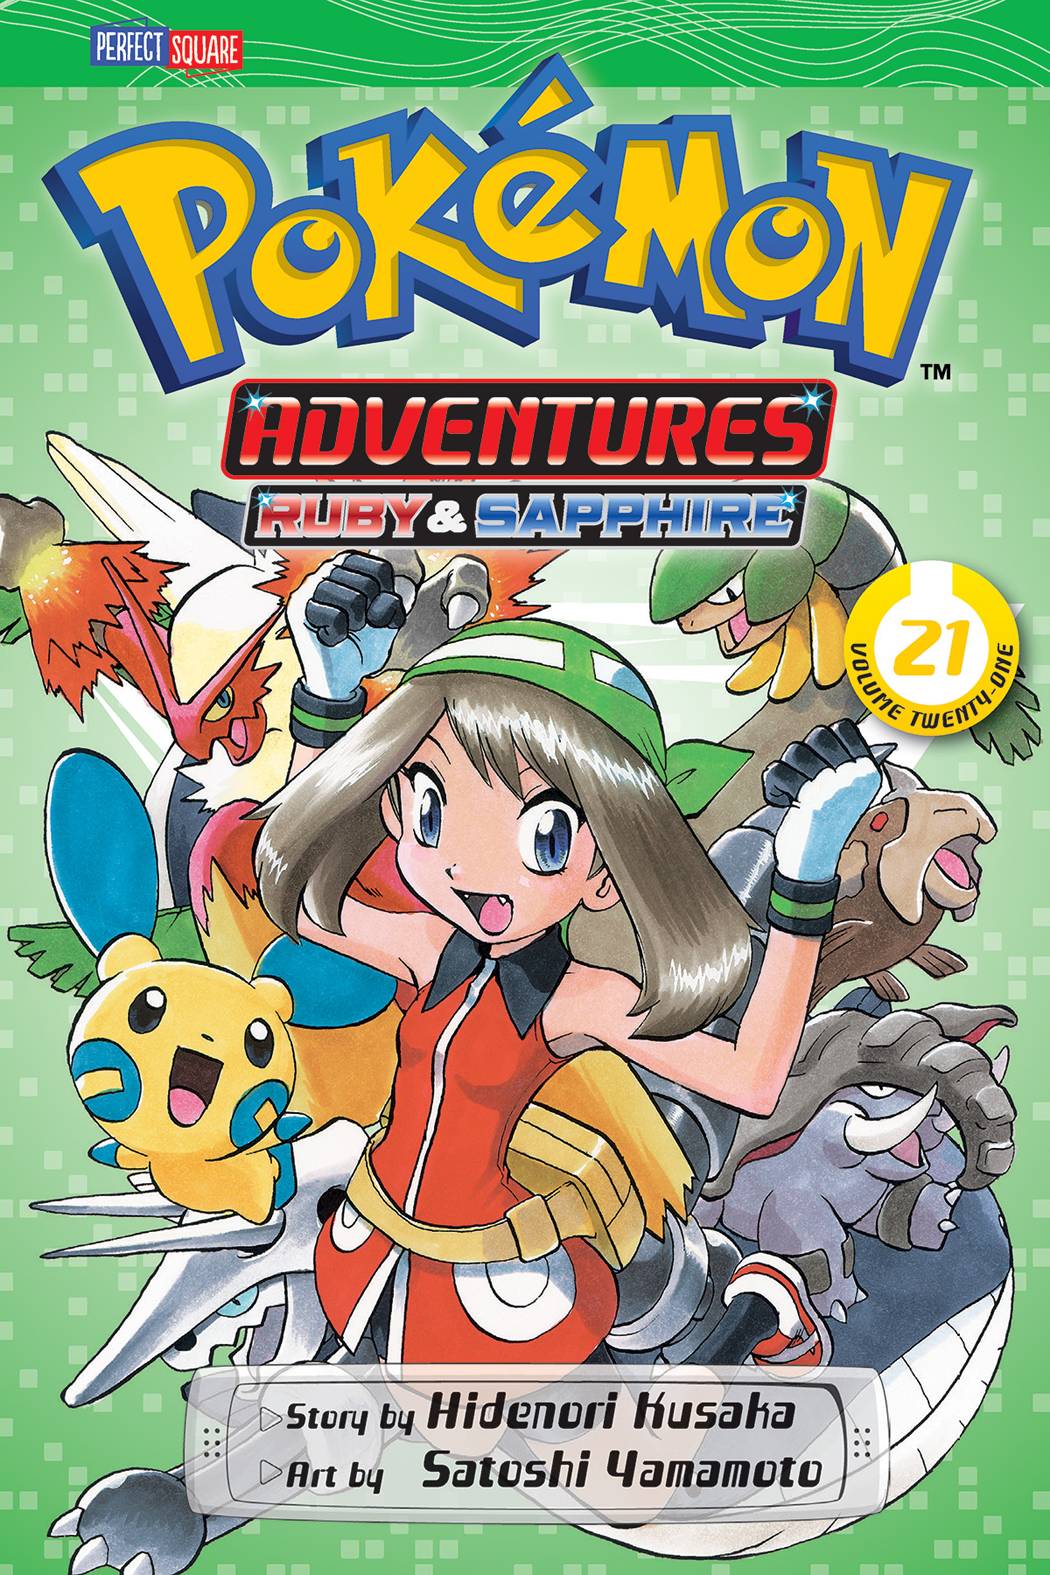 Pokémon Adventure Manga Volume 21 Ruby Sapphire